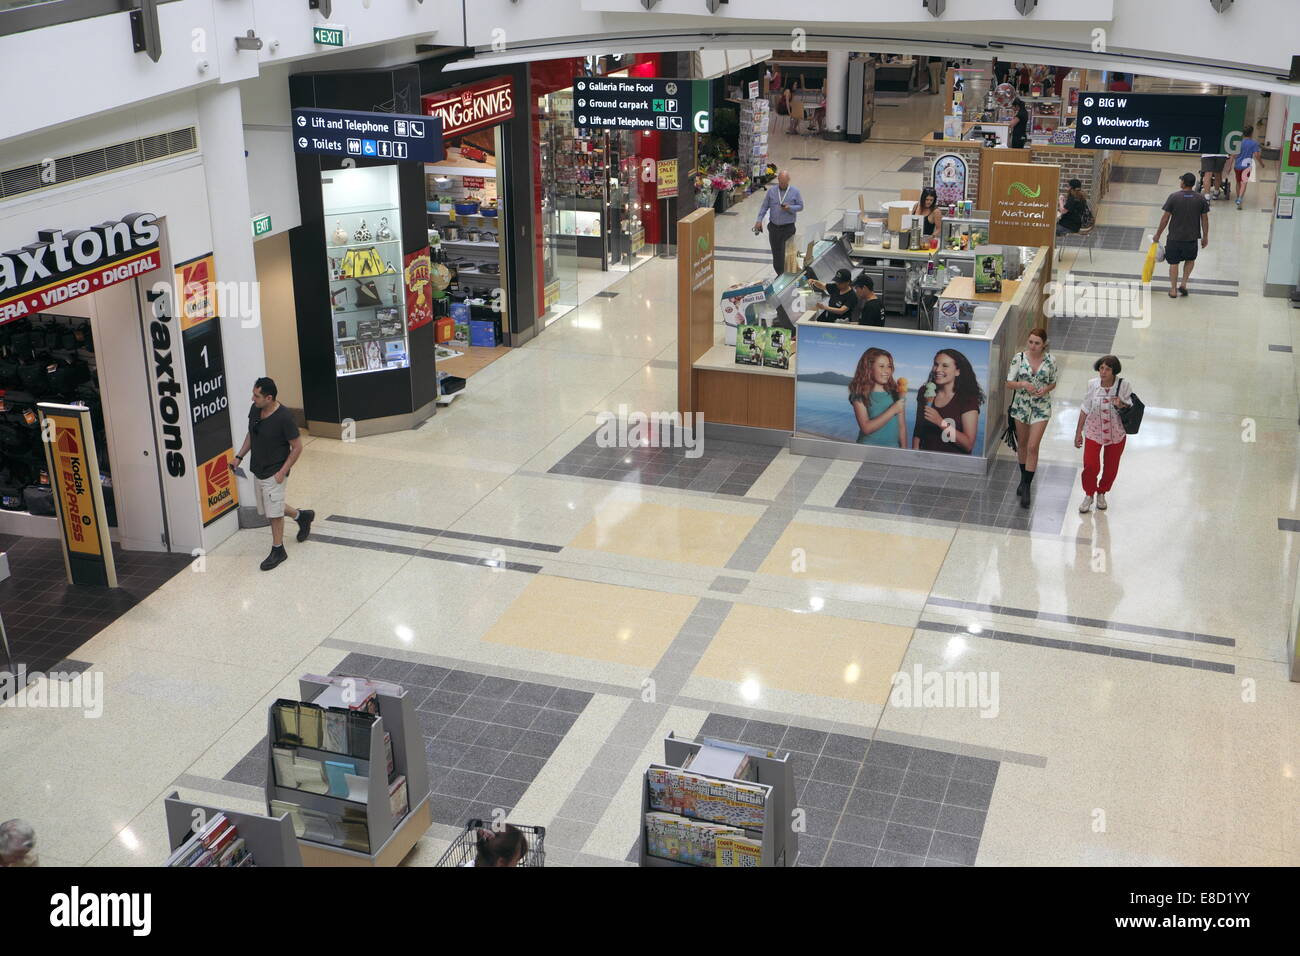 Big W department store in Sydney's warringah mall,australia Stock Photo -  Alamy